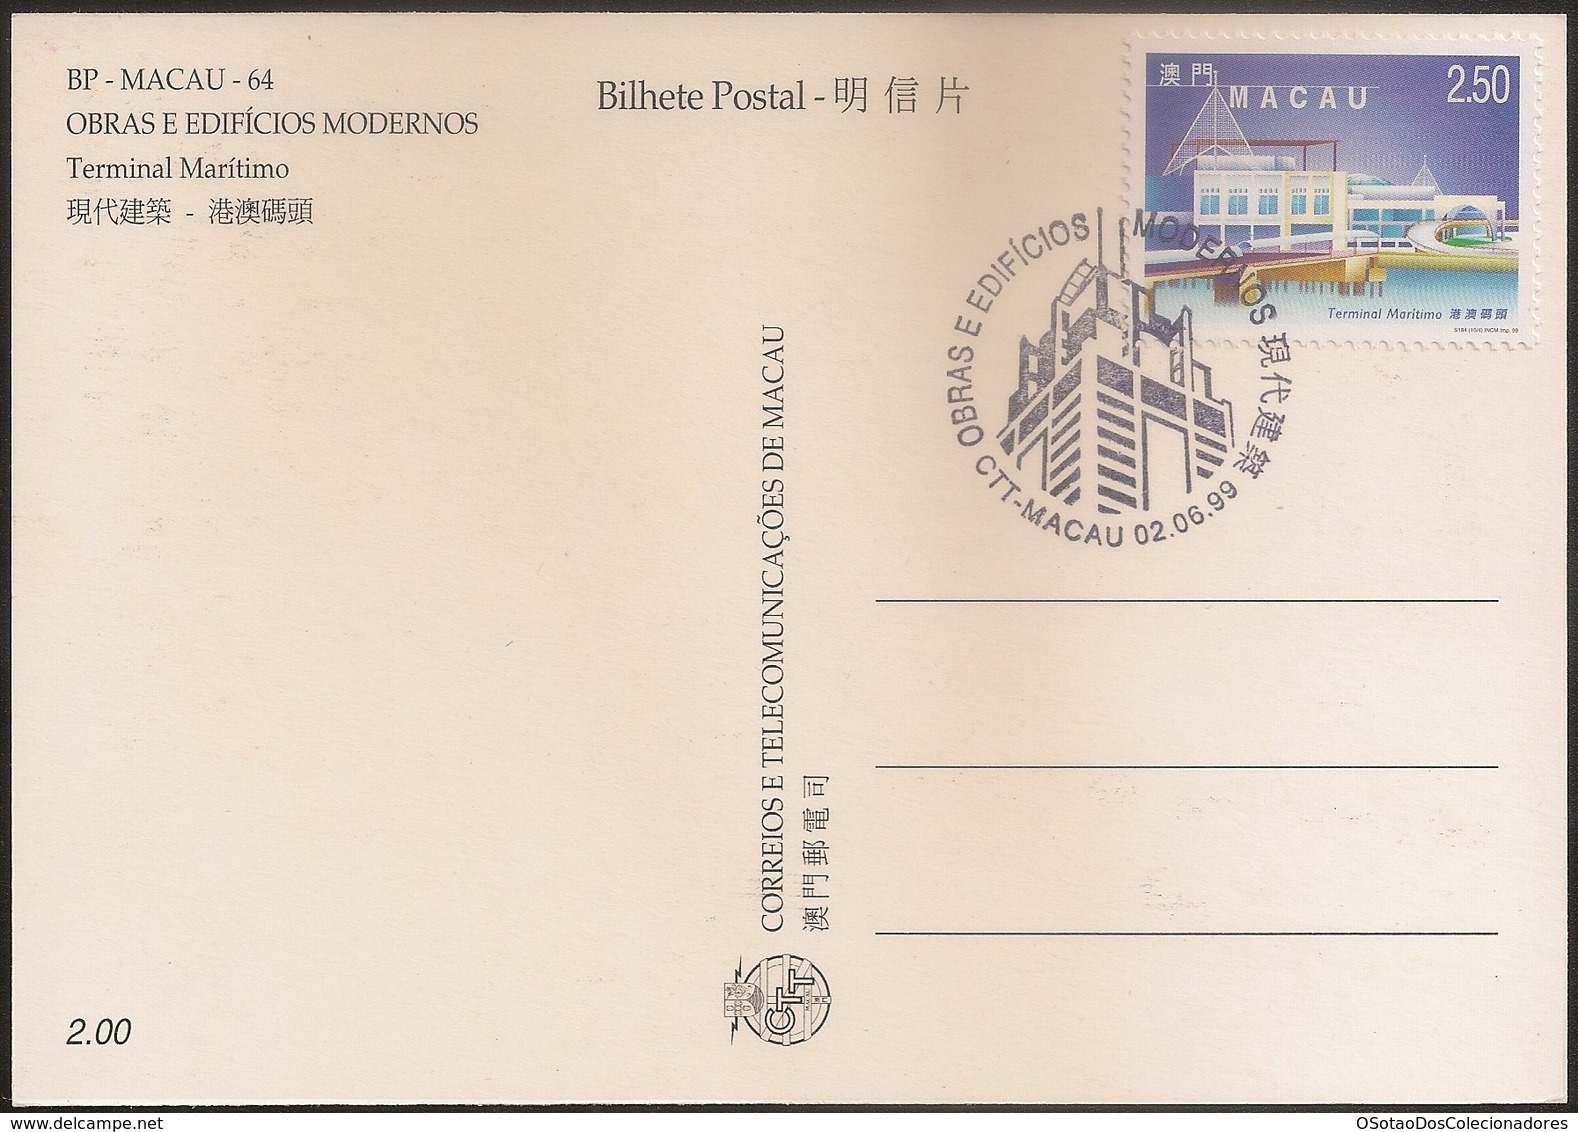 POSTAL MAXIMO - MAXIMUM CARD - Macau Macao Portugal 1999 - Obras Edifícios Modernos - Modern Architecture - Terminal Mar - Postal Stationery